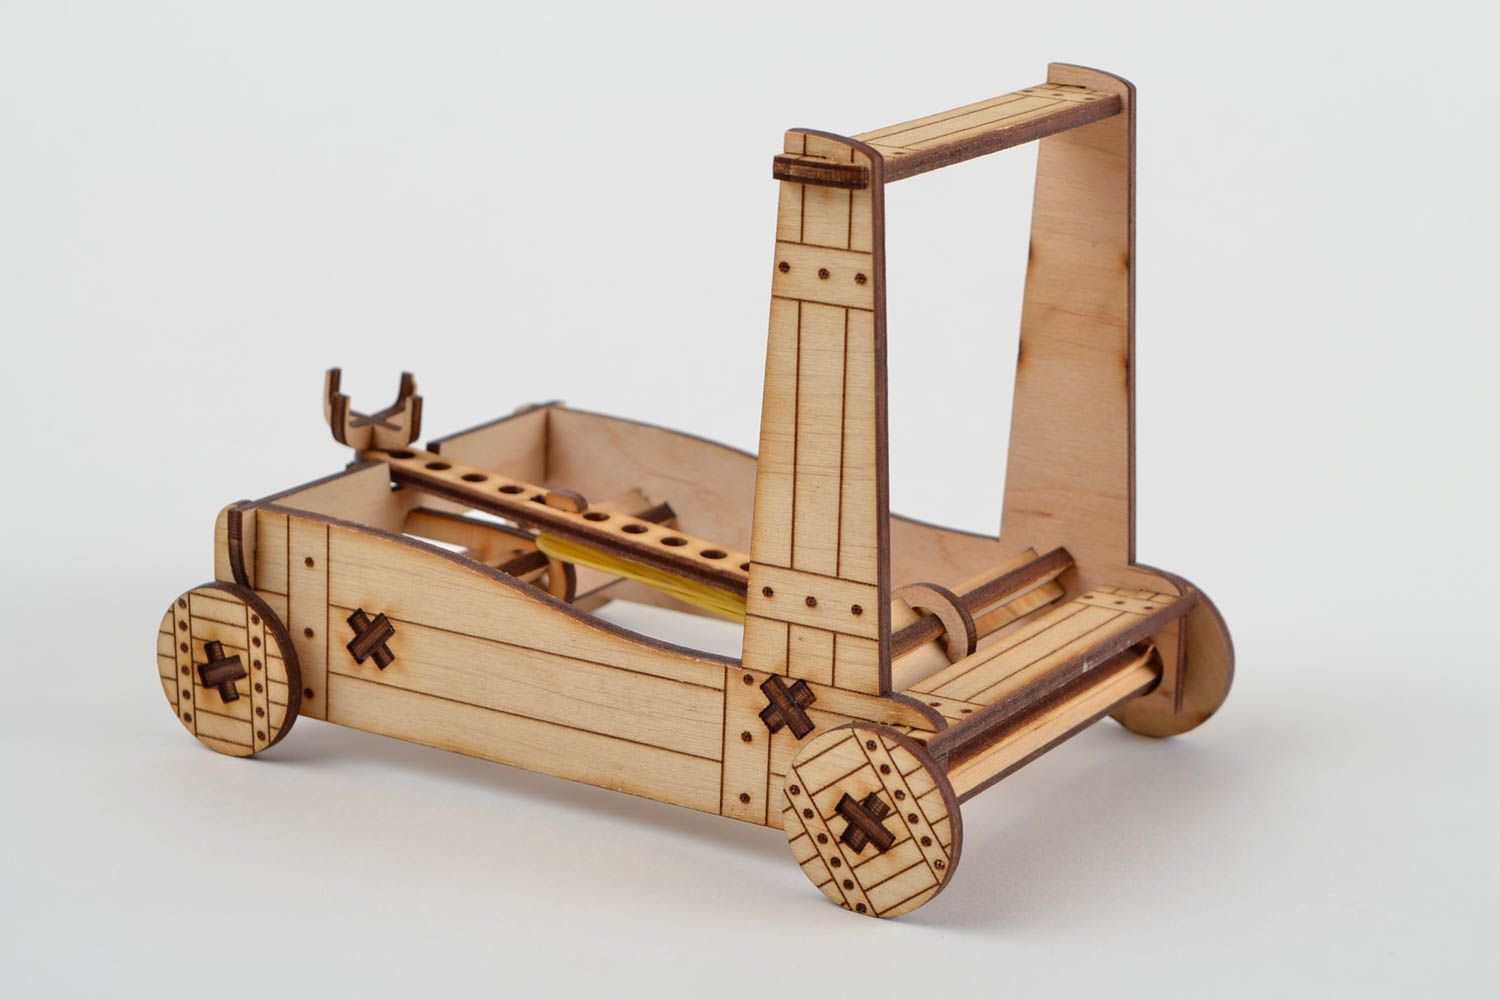 Handmade designer wooden souvenir stylish toy for kids blank for creativity photo 3